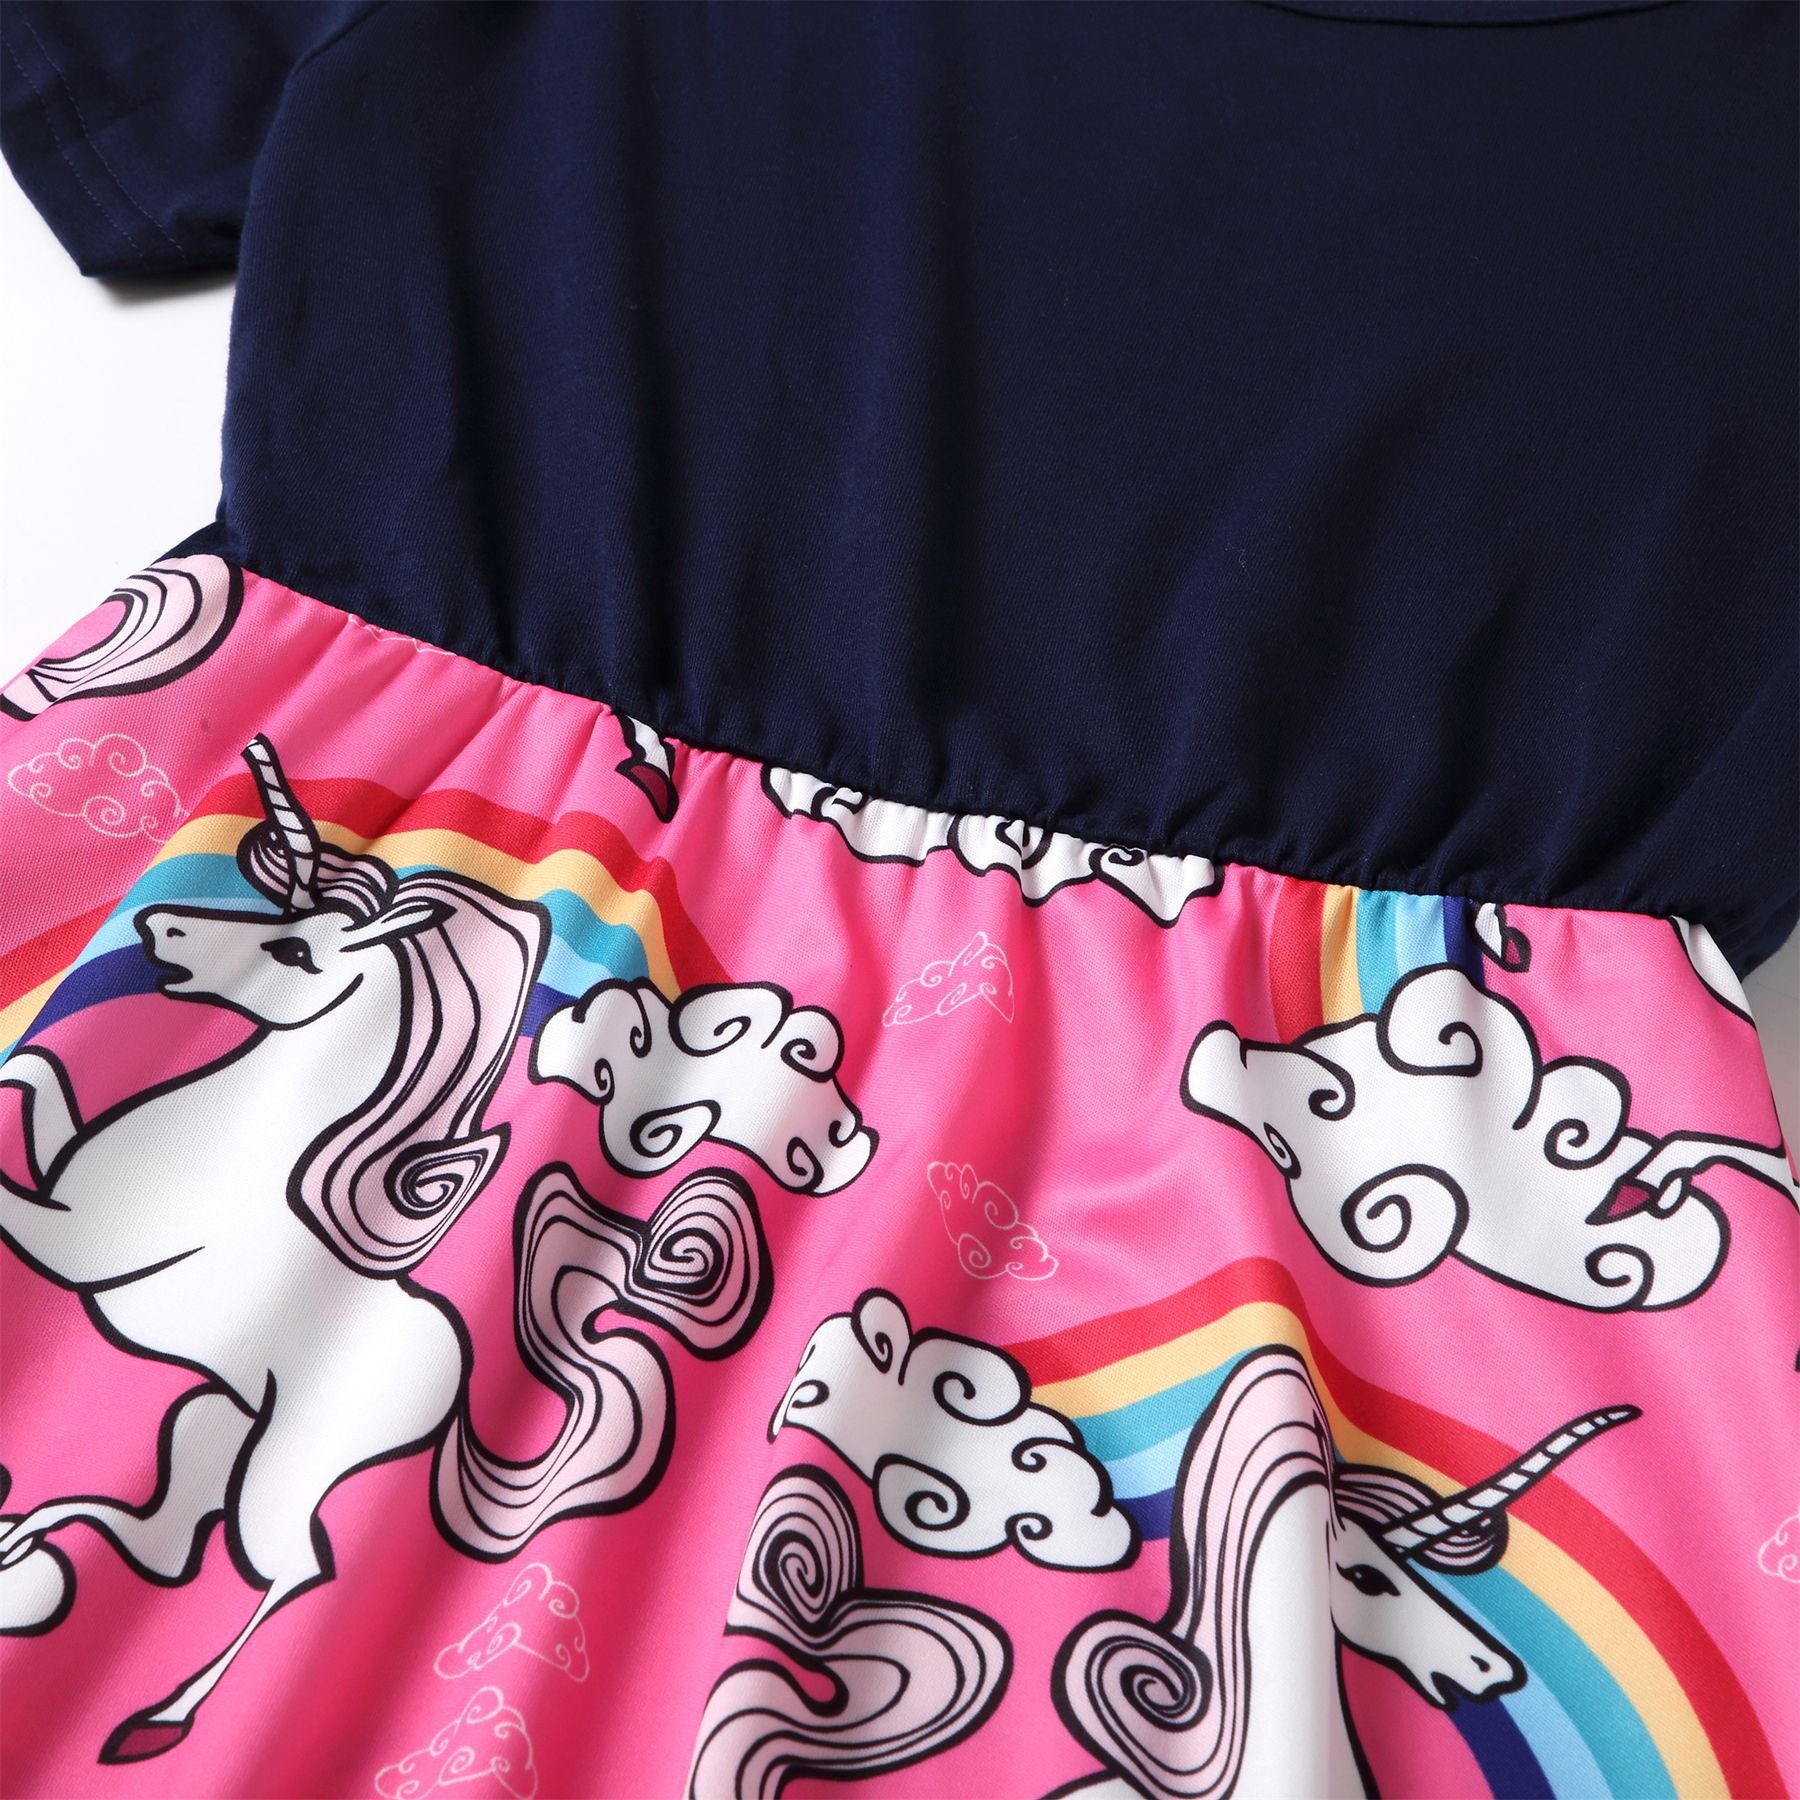 Family Matchinf Parent-child Round Collar Short Sleeve Rainbow Pony Dresses